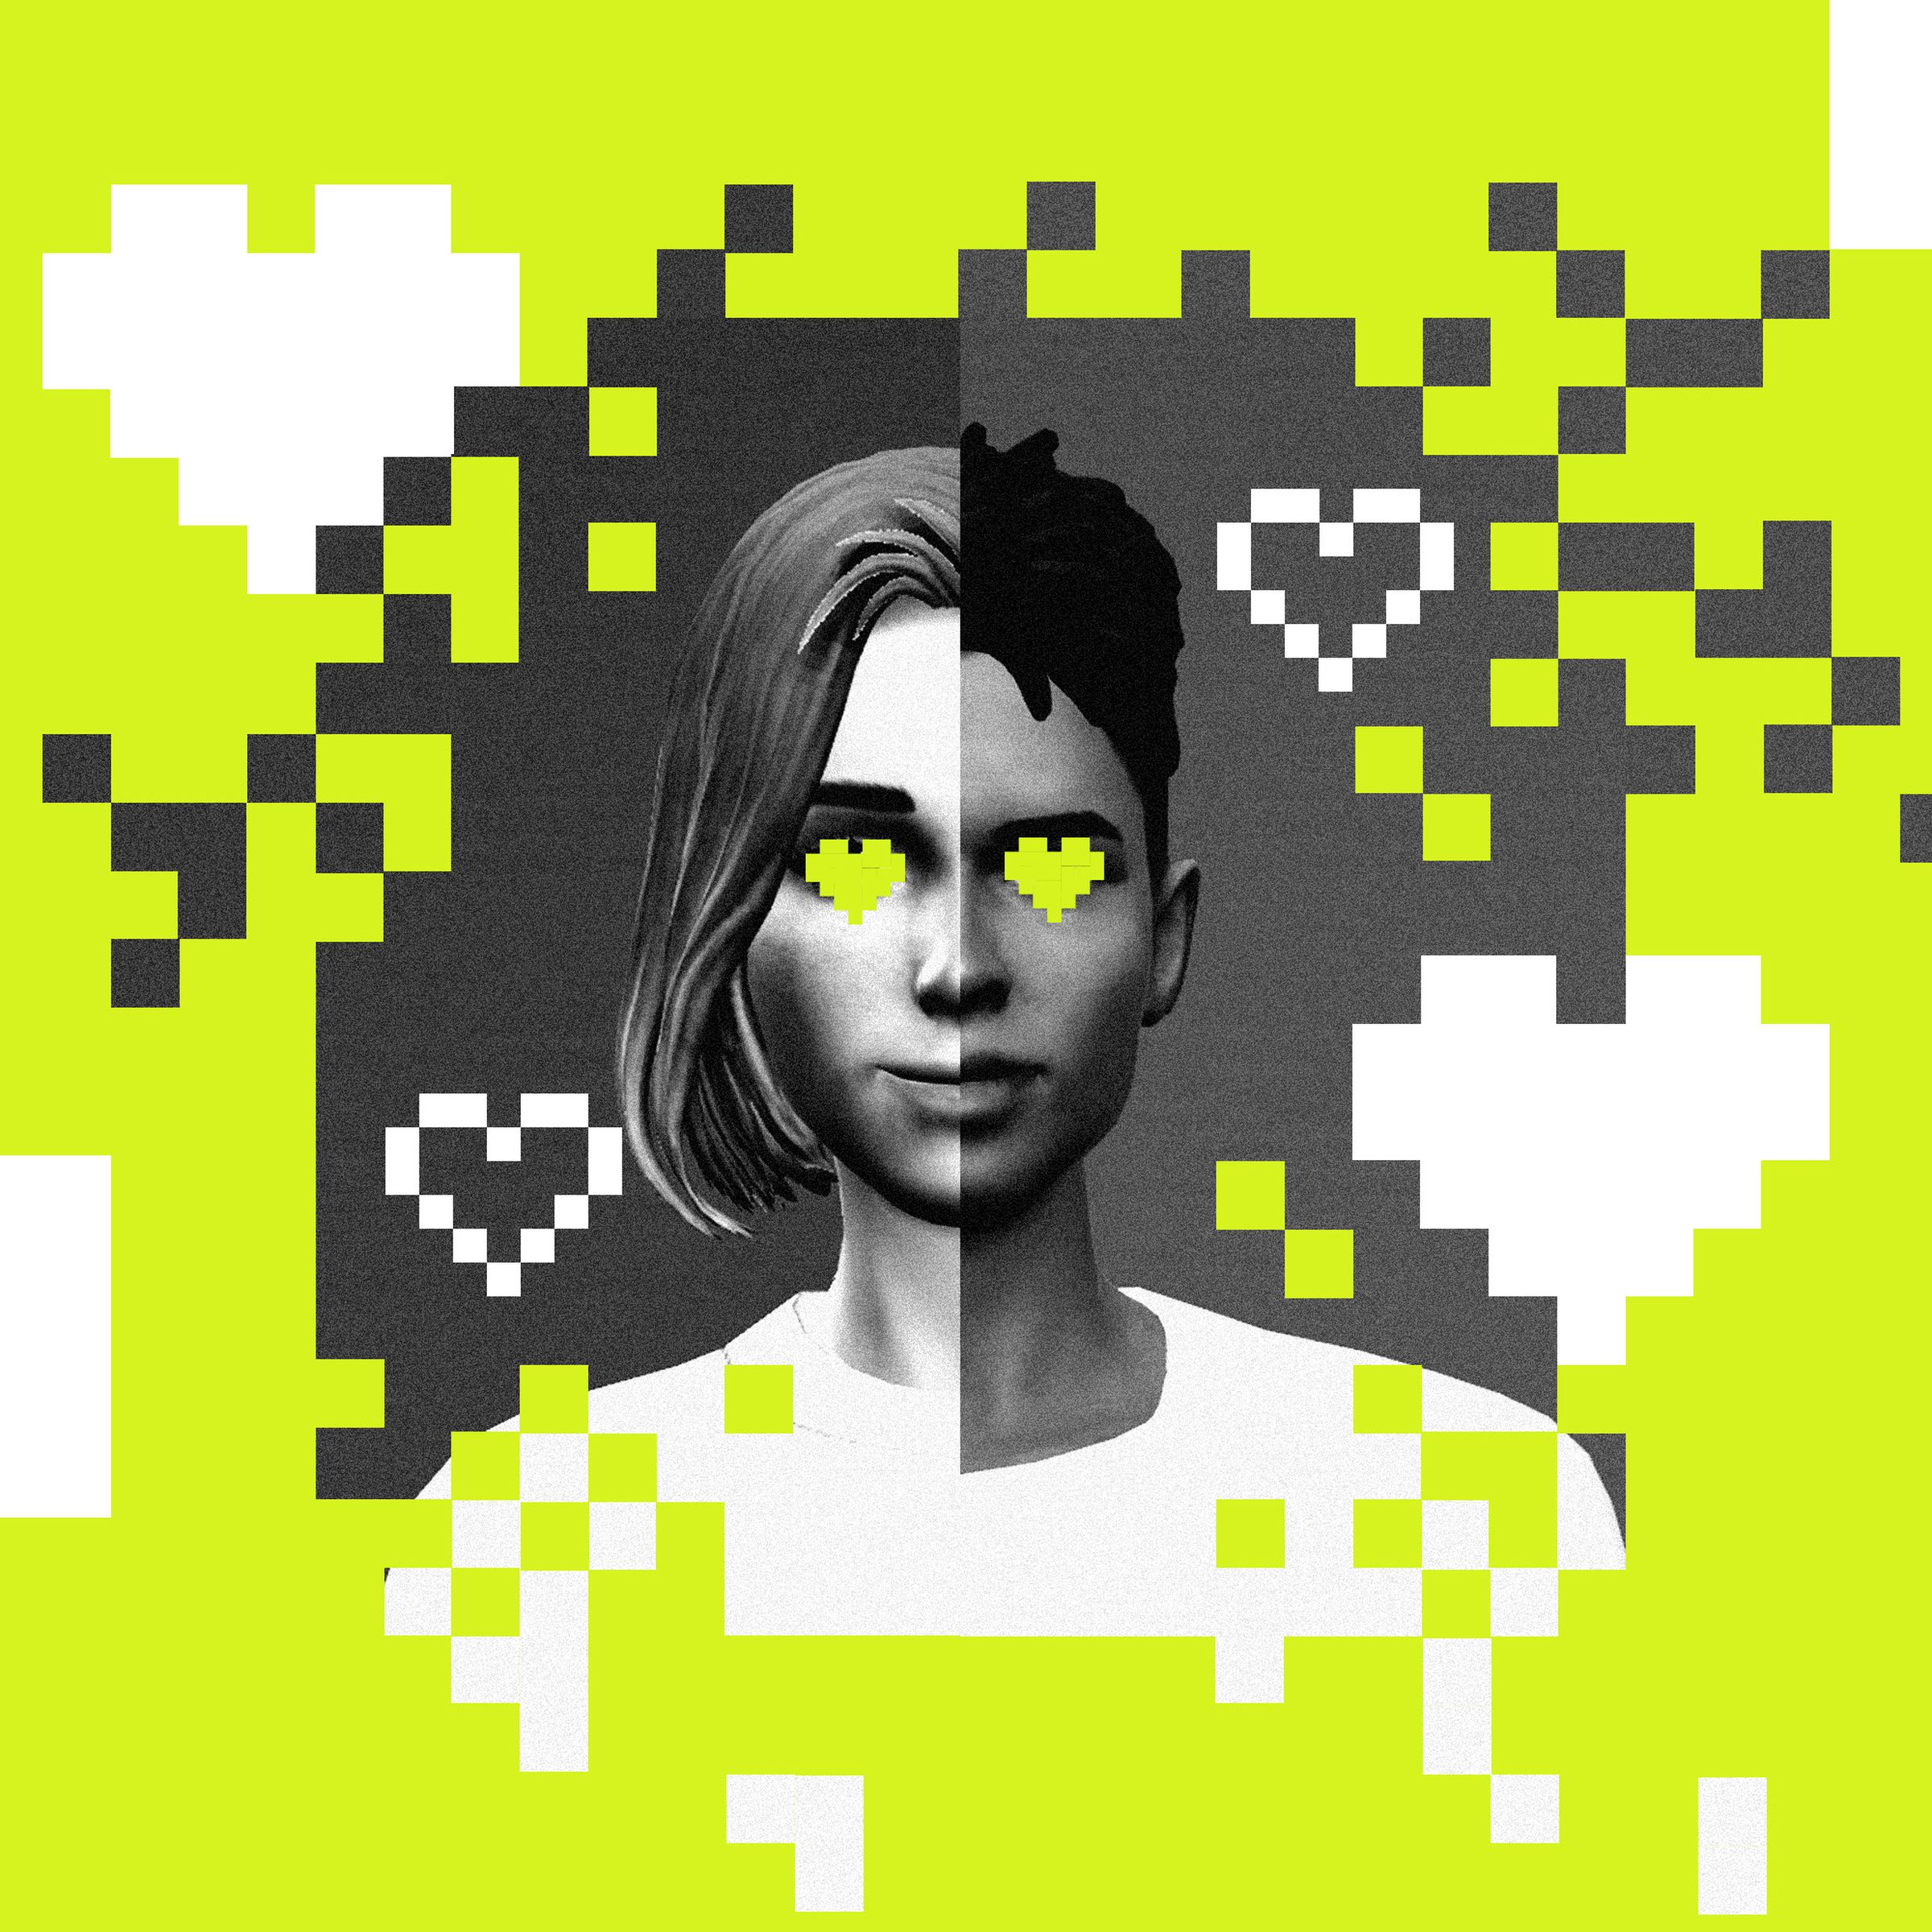 A stylized image of avatars from the AI chatbot company Replika.